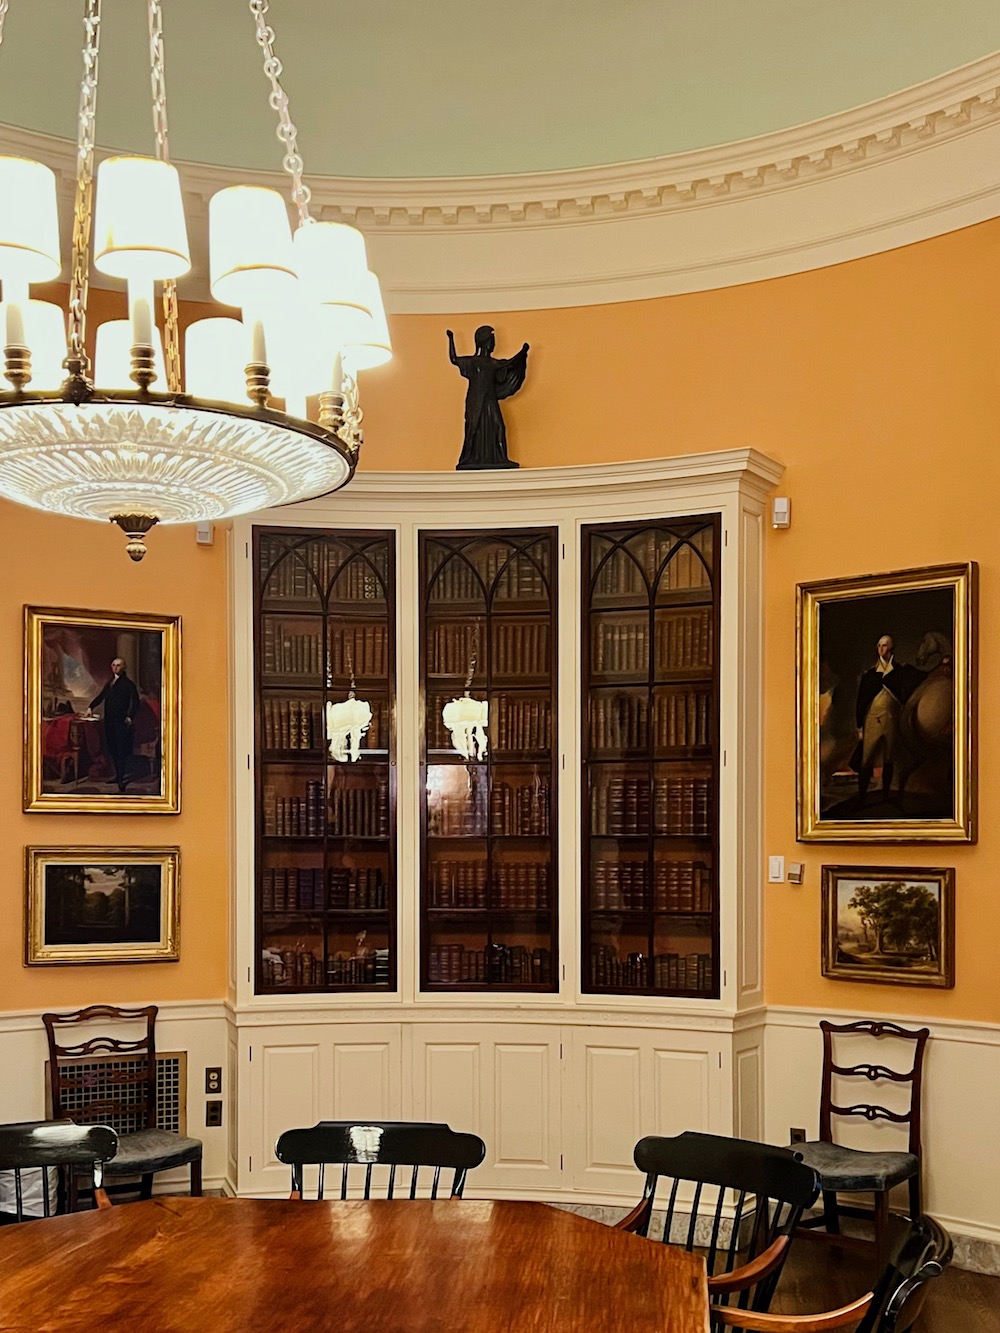 George Washington Bookcase - trustee's room